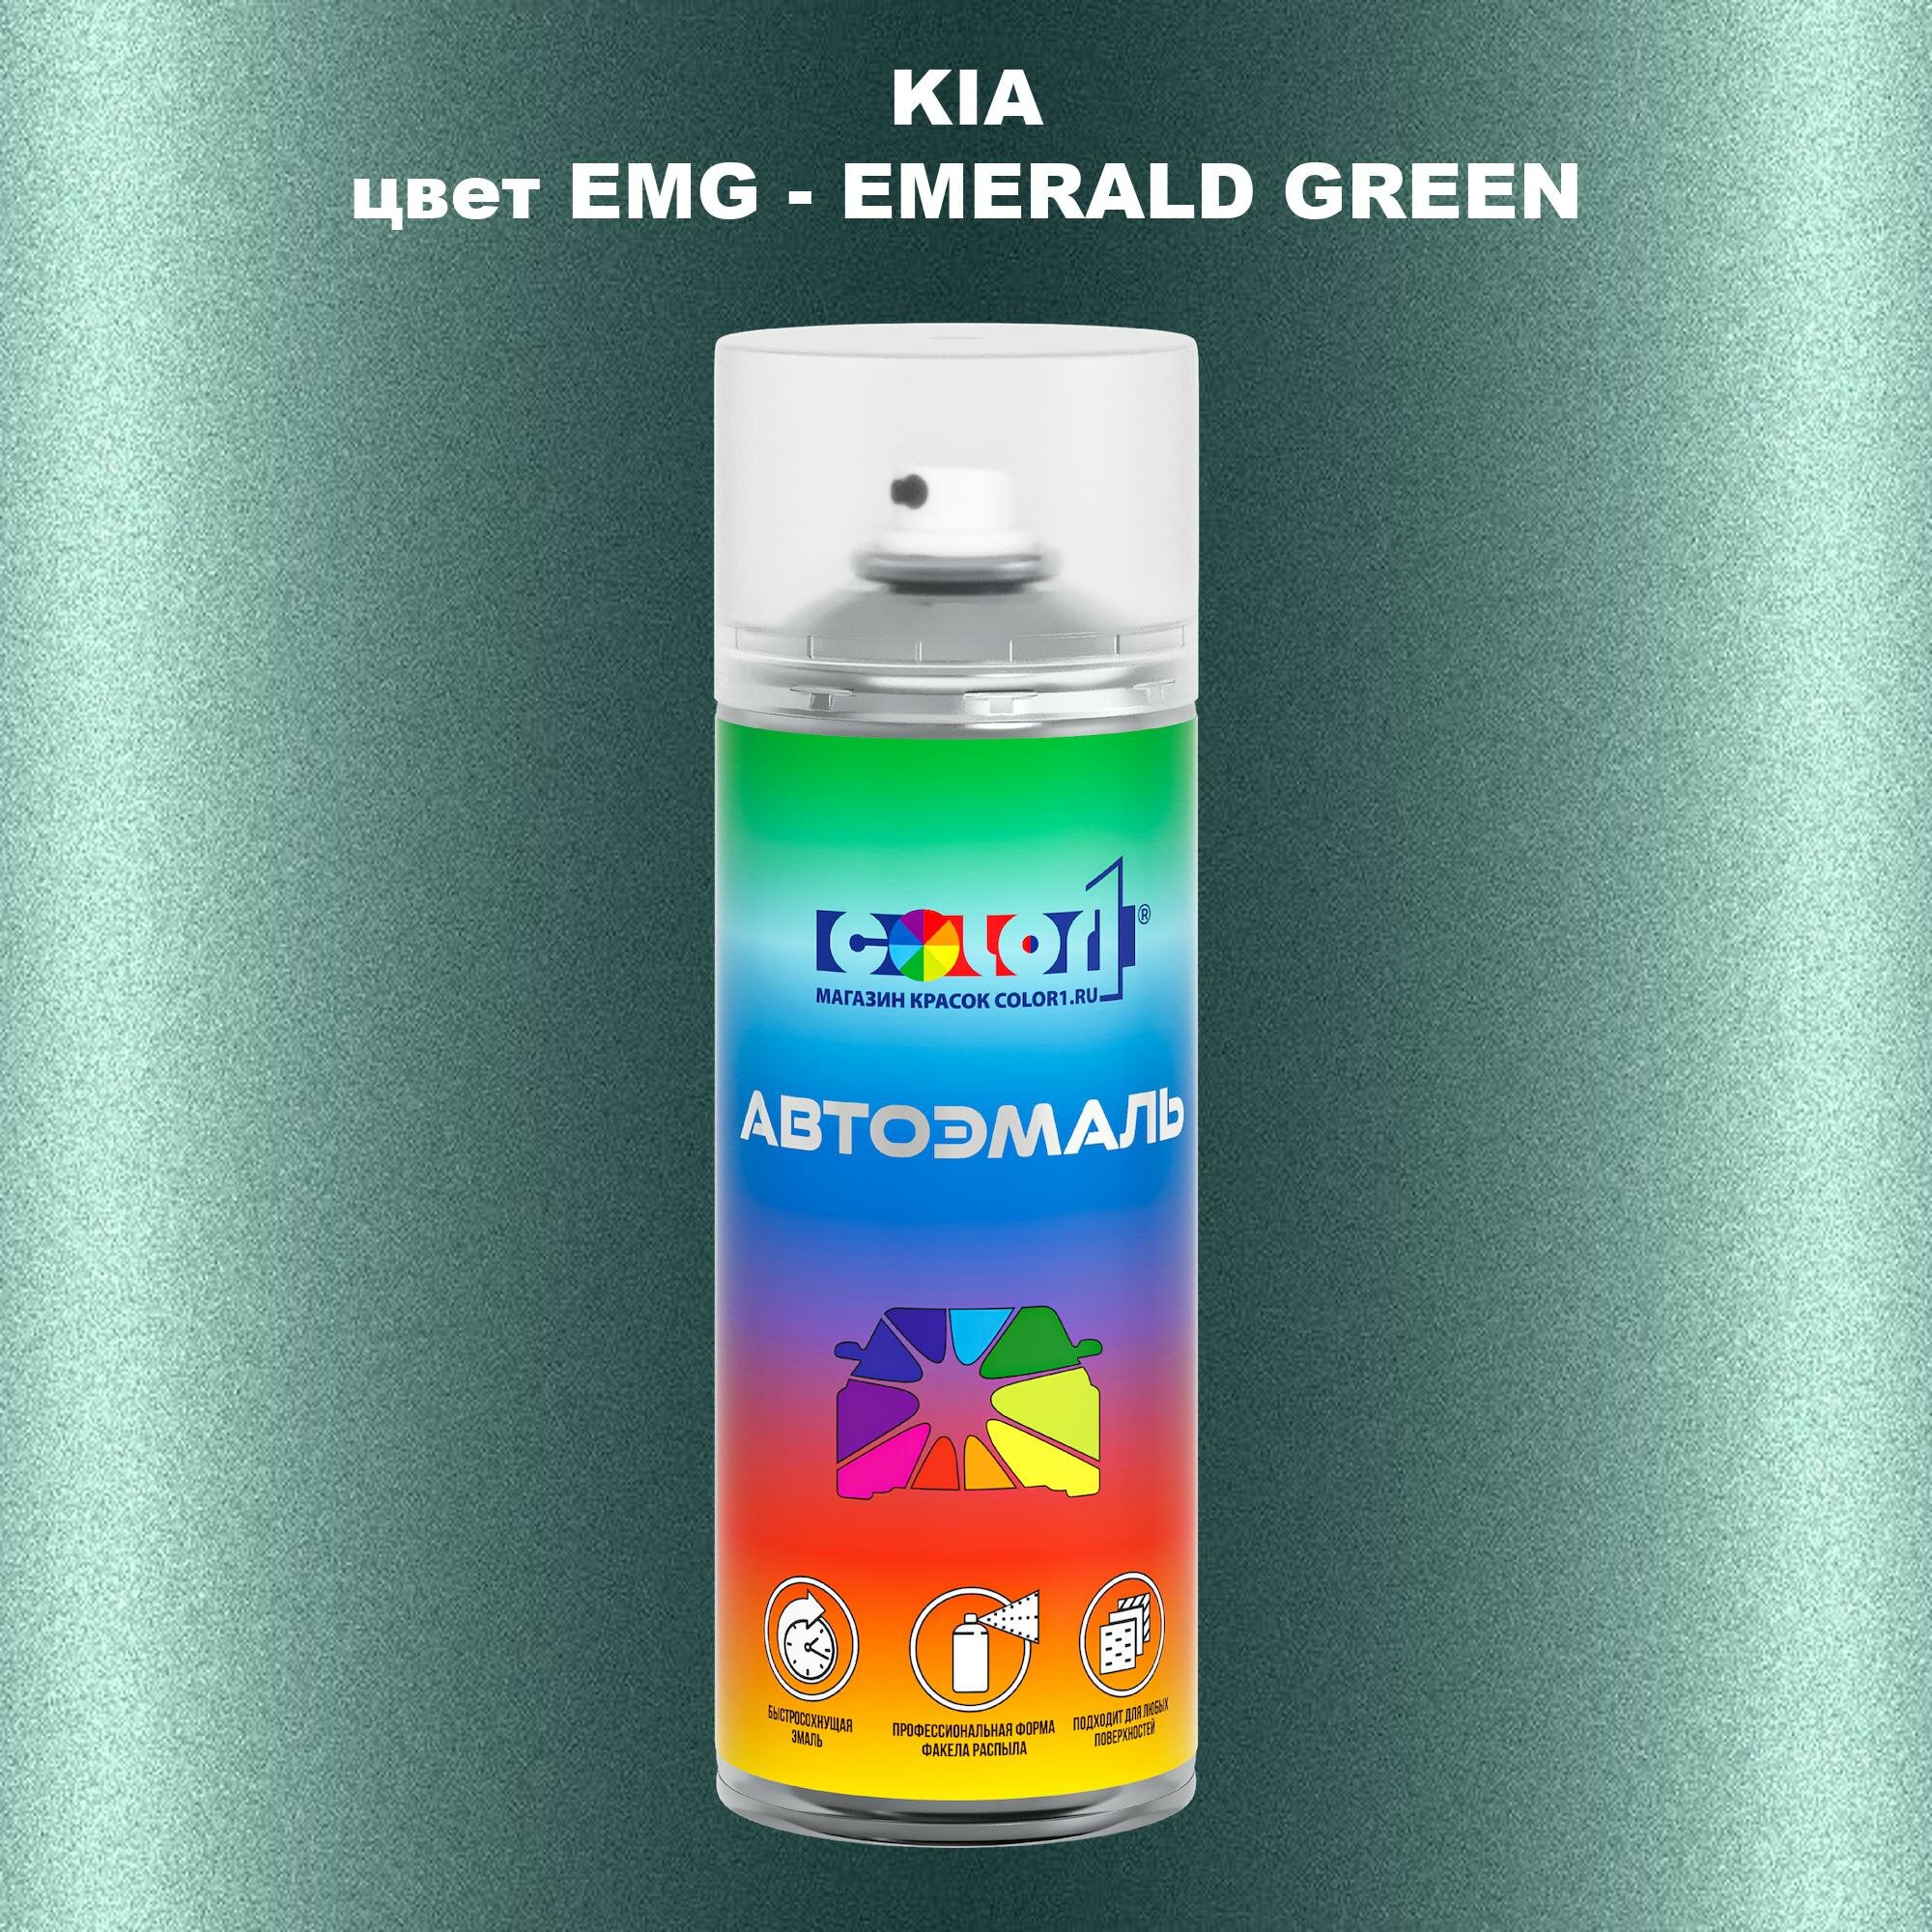 Аэрозольная краска COLOR1 для KIA, цвет EMG - EMERALD GREEN